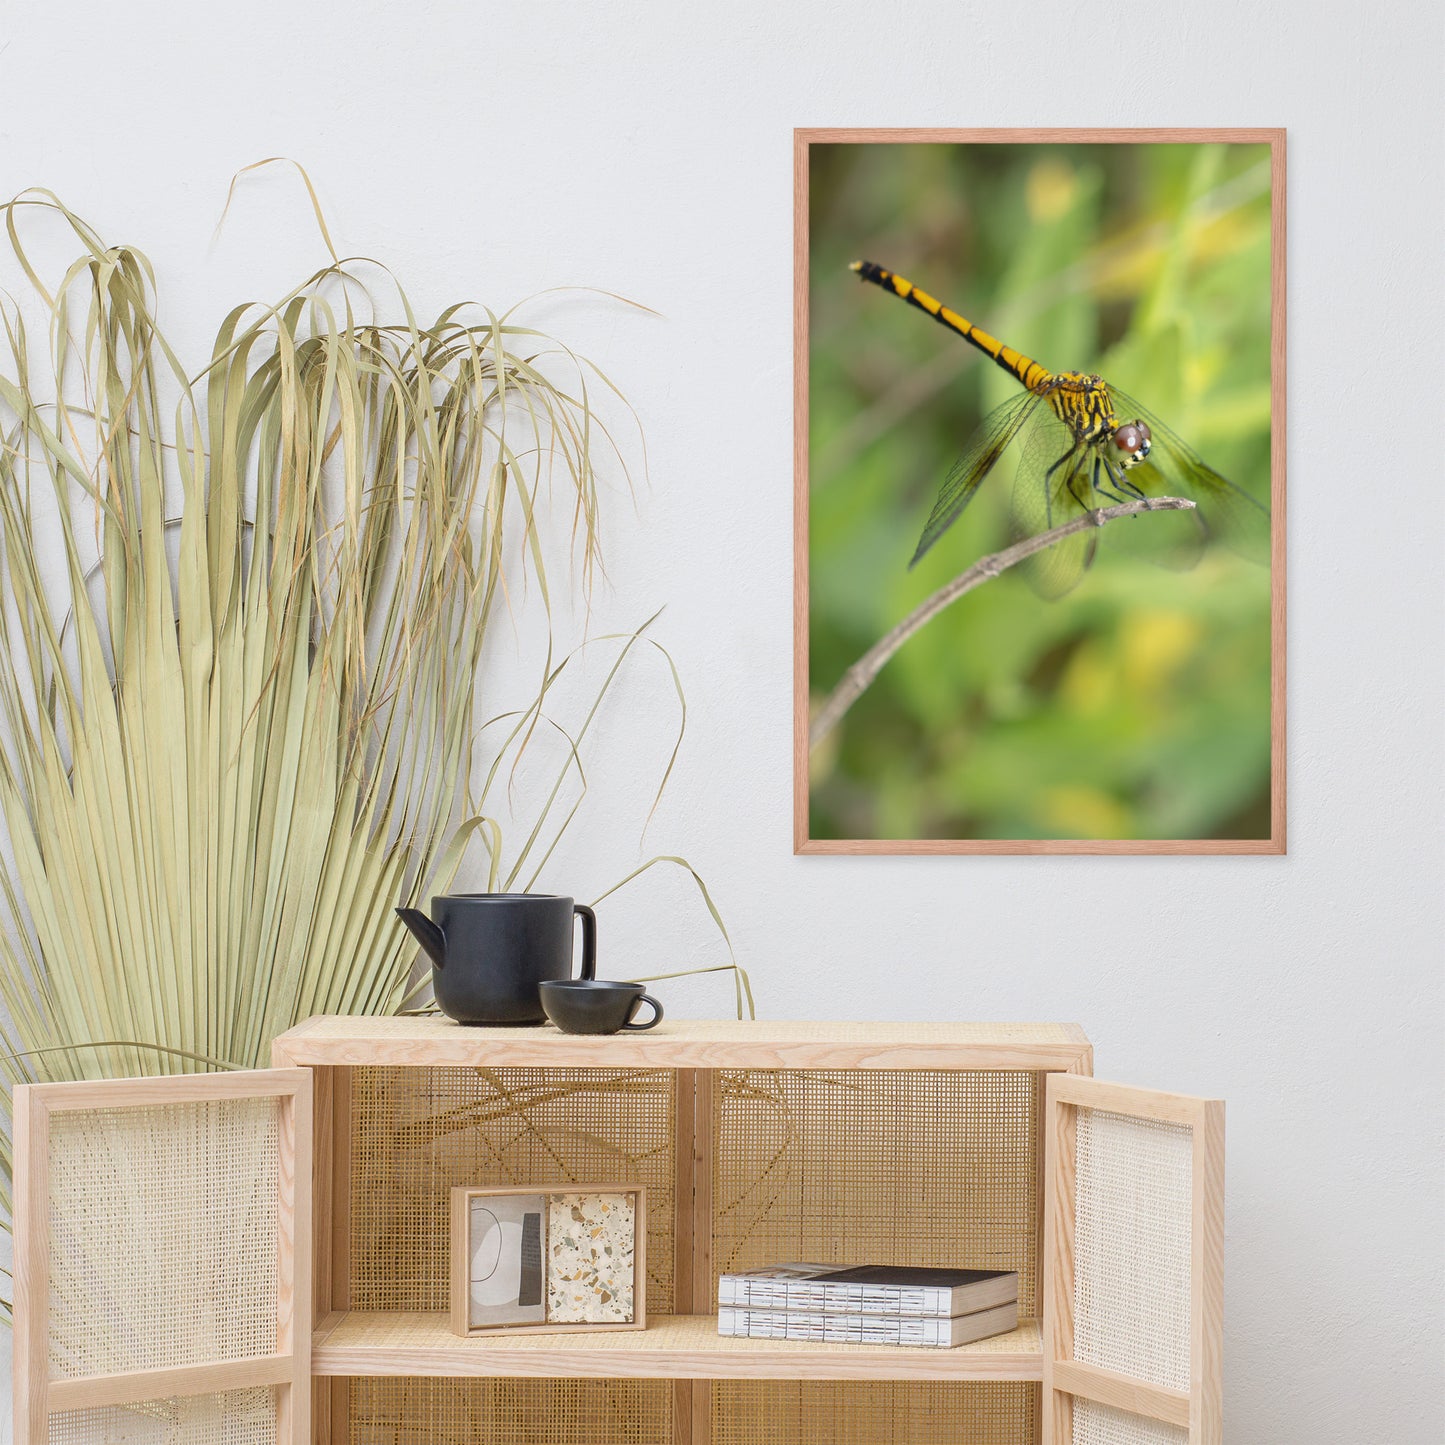 Dragonfly Wildlife Photo Framed Wall Art Prints